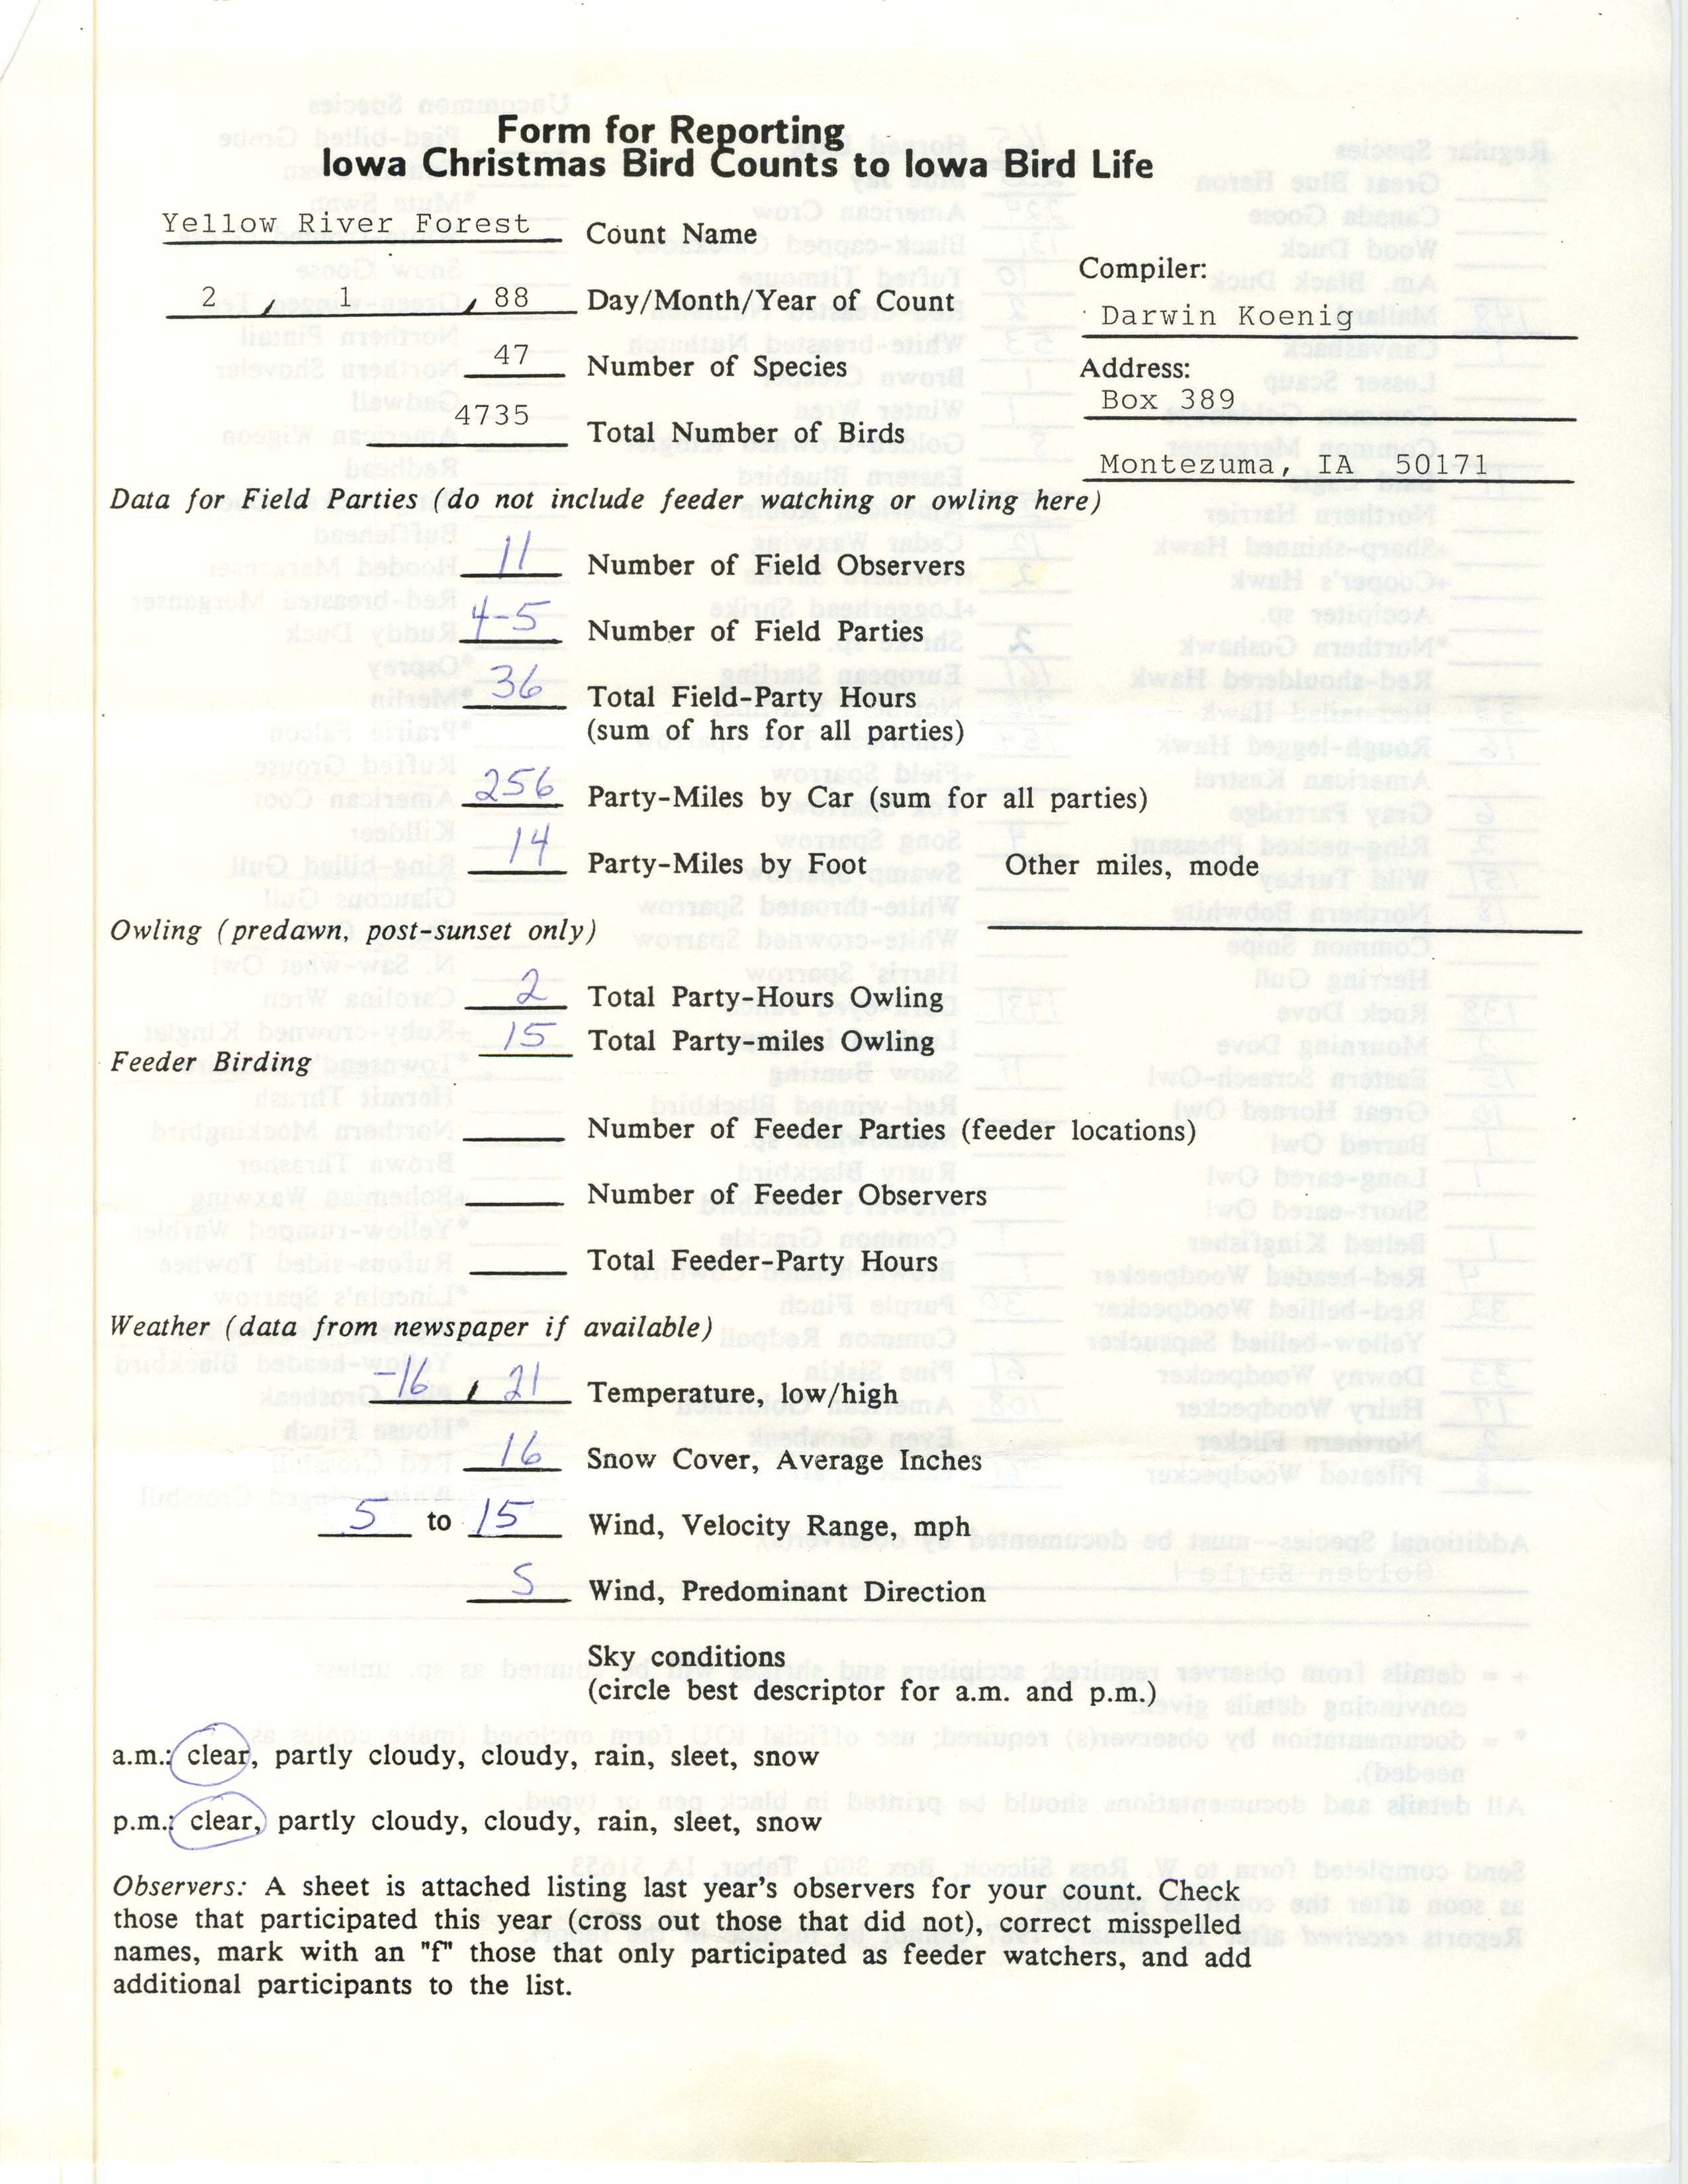 Form for reporting Iowa Christmas bird counts to Iowa Bird Life, Darwin Koenig, January 2, 1988